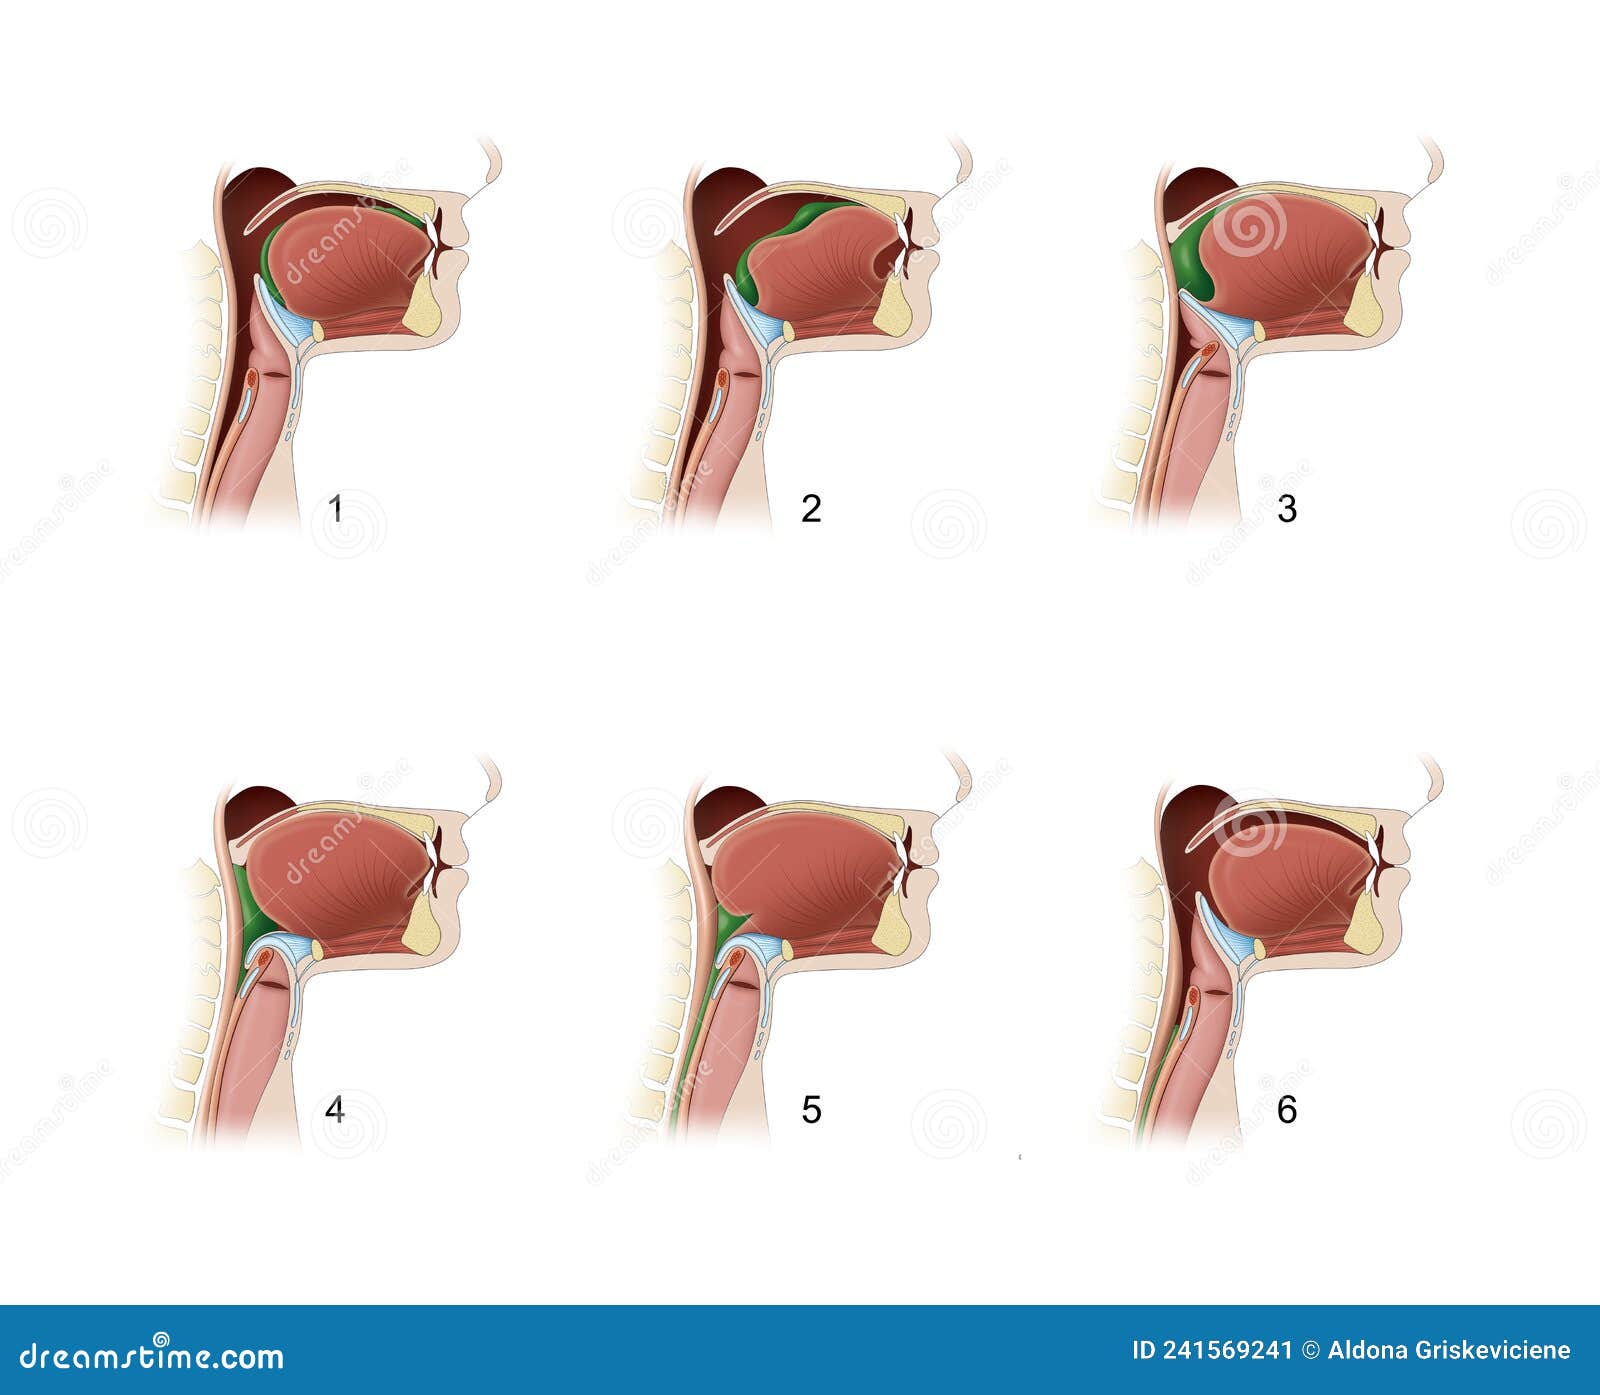 pharynx. swallowing process